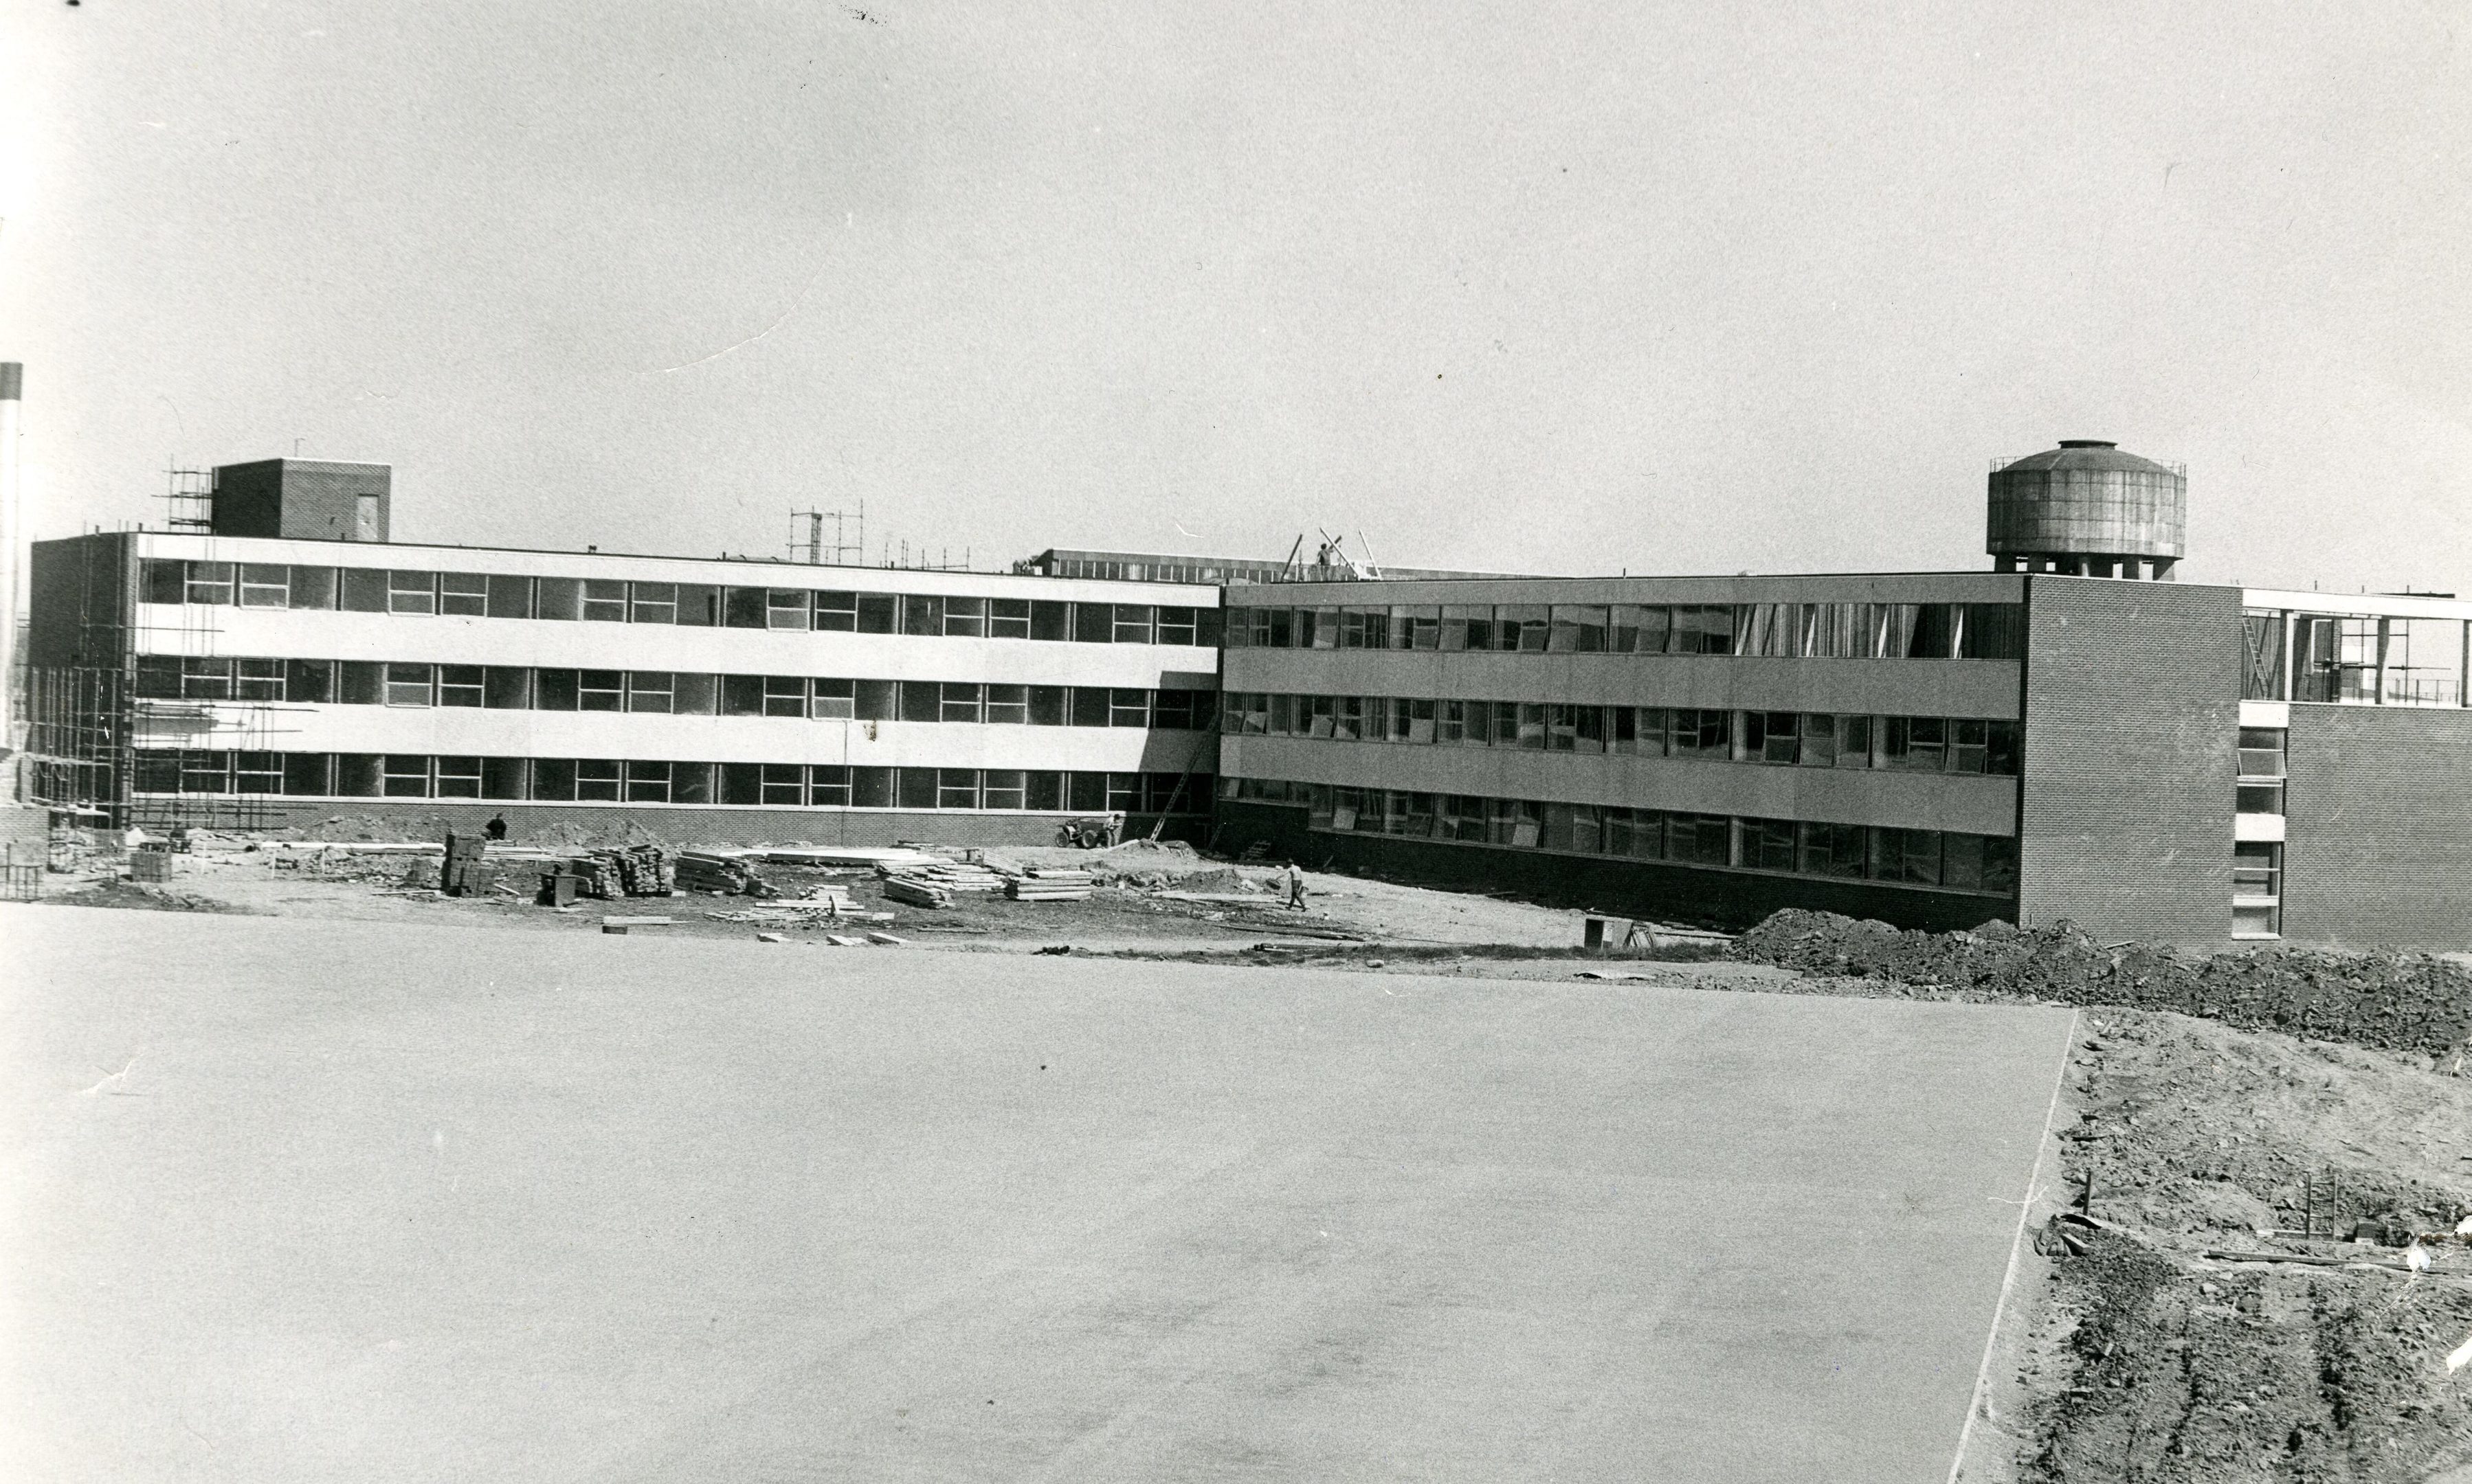 Menzieshill High School under construction in 1971.